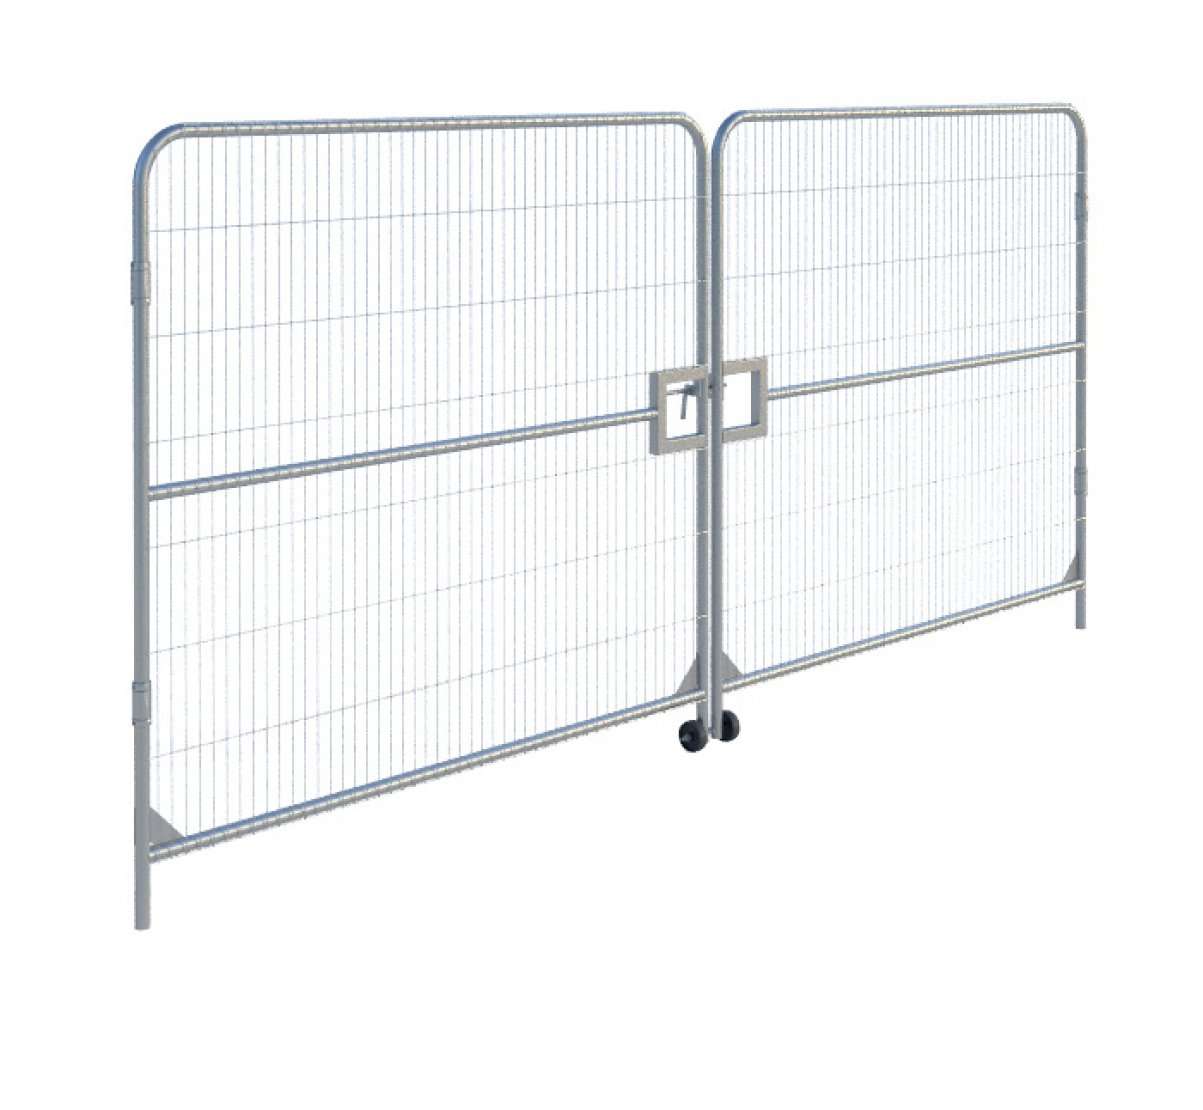 Temporary Fence Vehicle Gates (3.5m x 2.0m – Set 2)